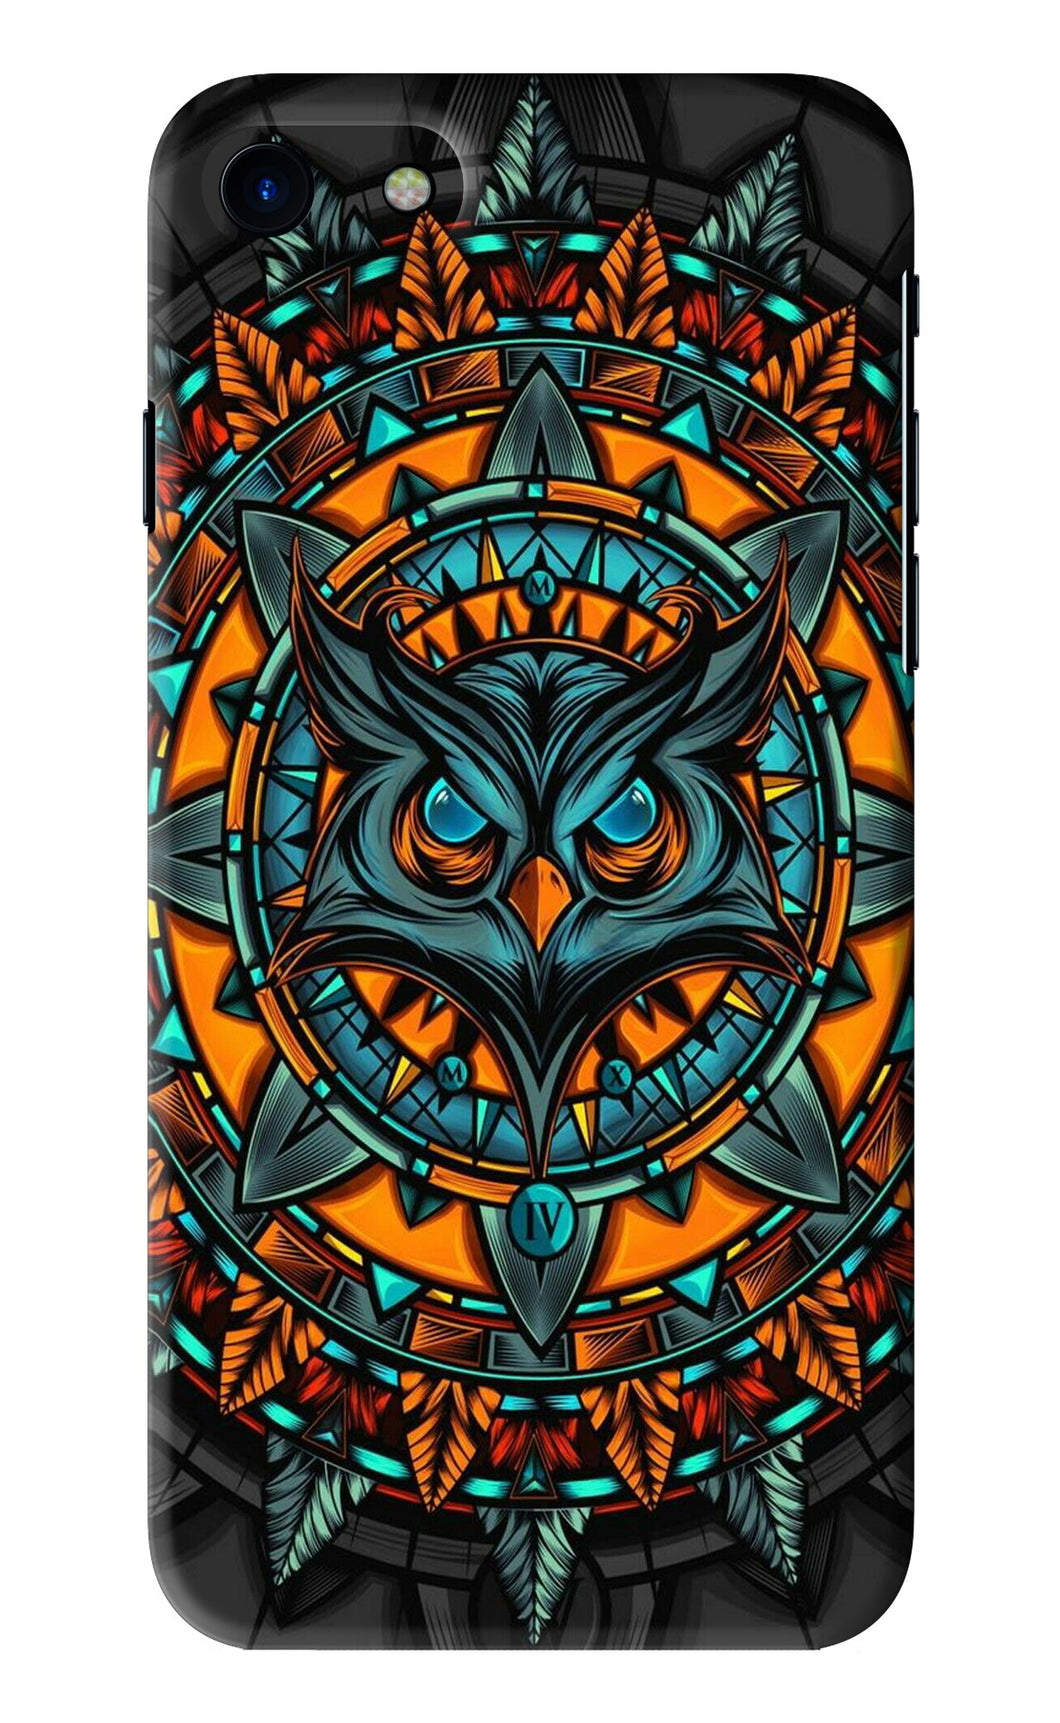 Angry Owl Art iPhone 8 Back Skin Wrap